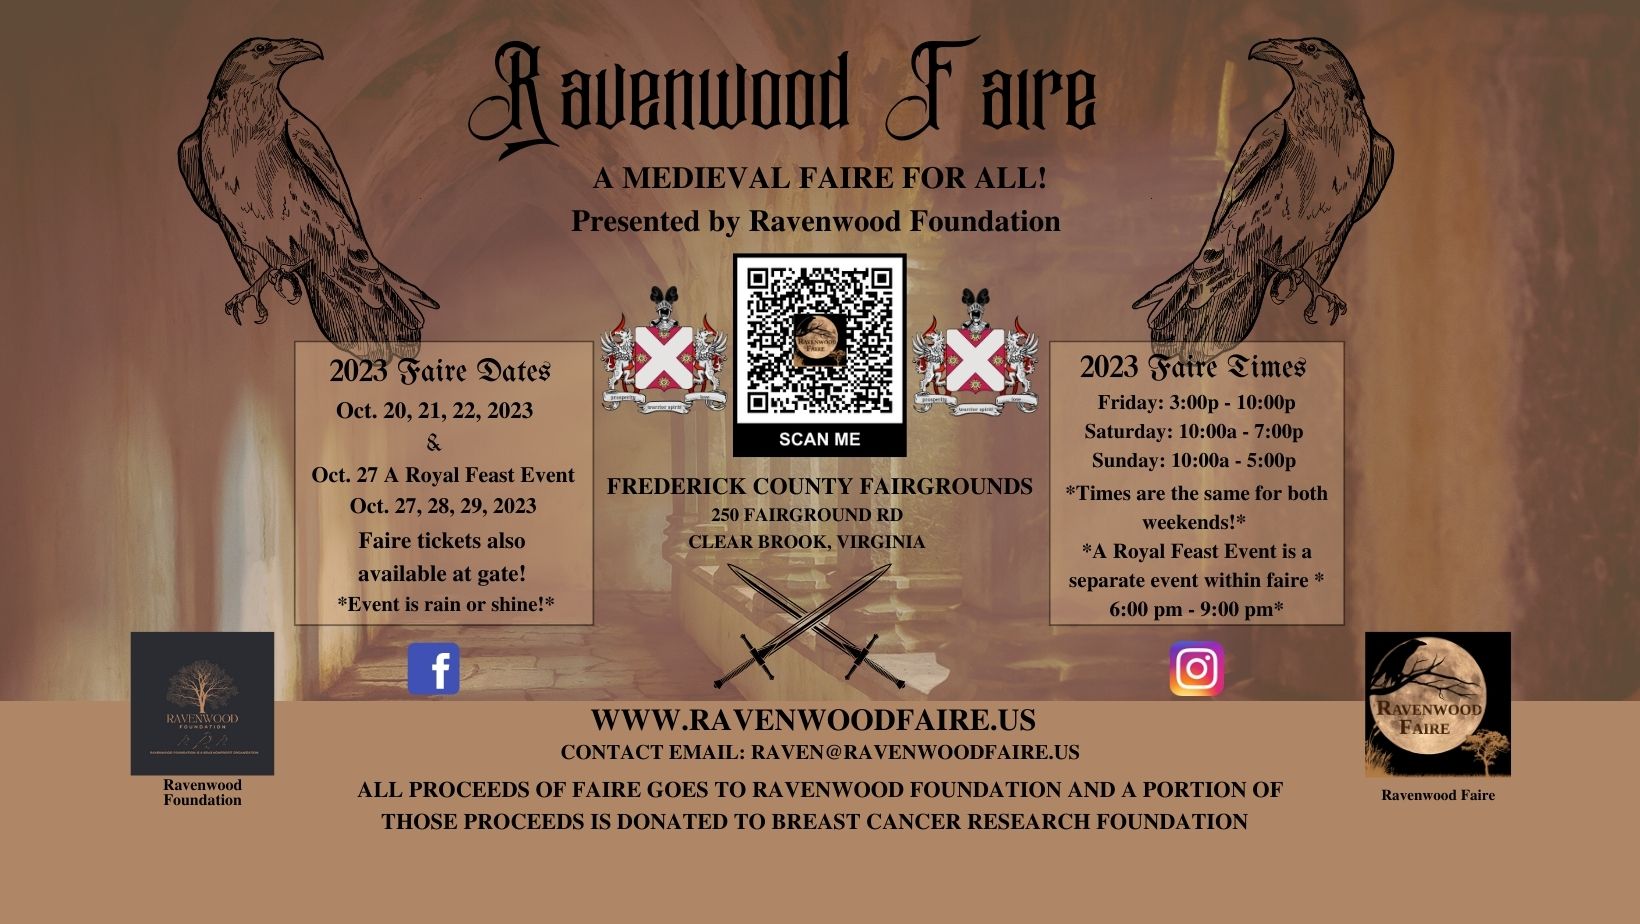 Ravenwood Faire presented by Ravenwood Foundation